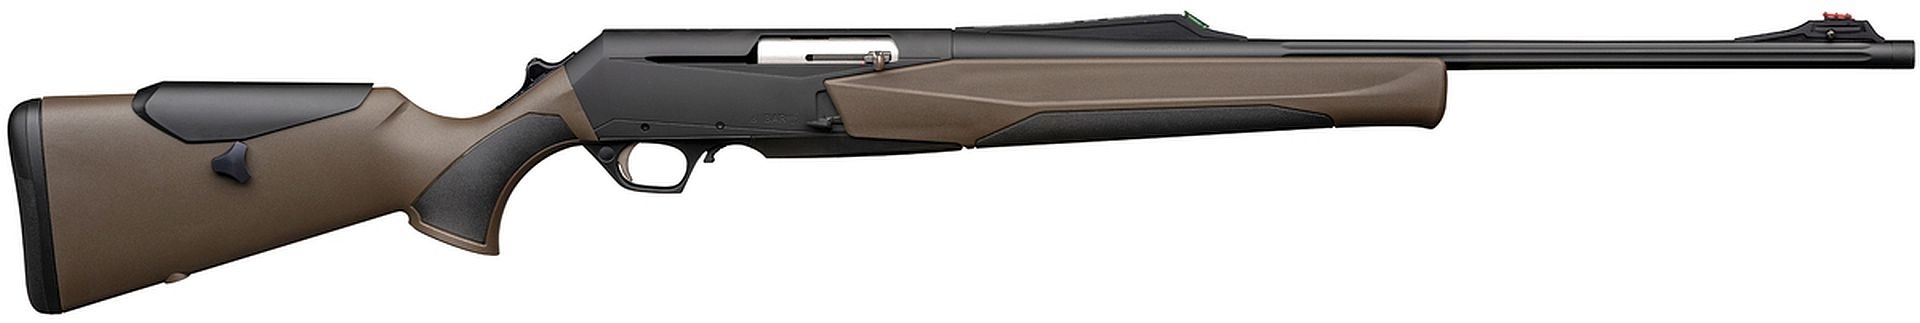 Browning BAR MK3 Compo Adj 30-06 mit Gewinde, LINKS